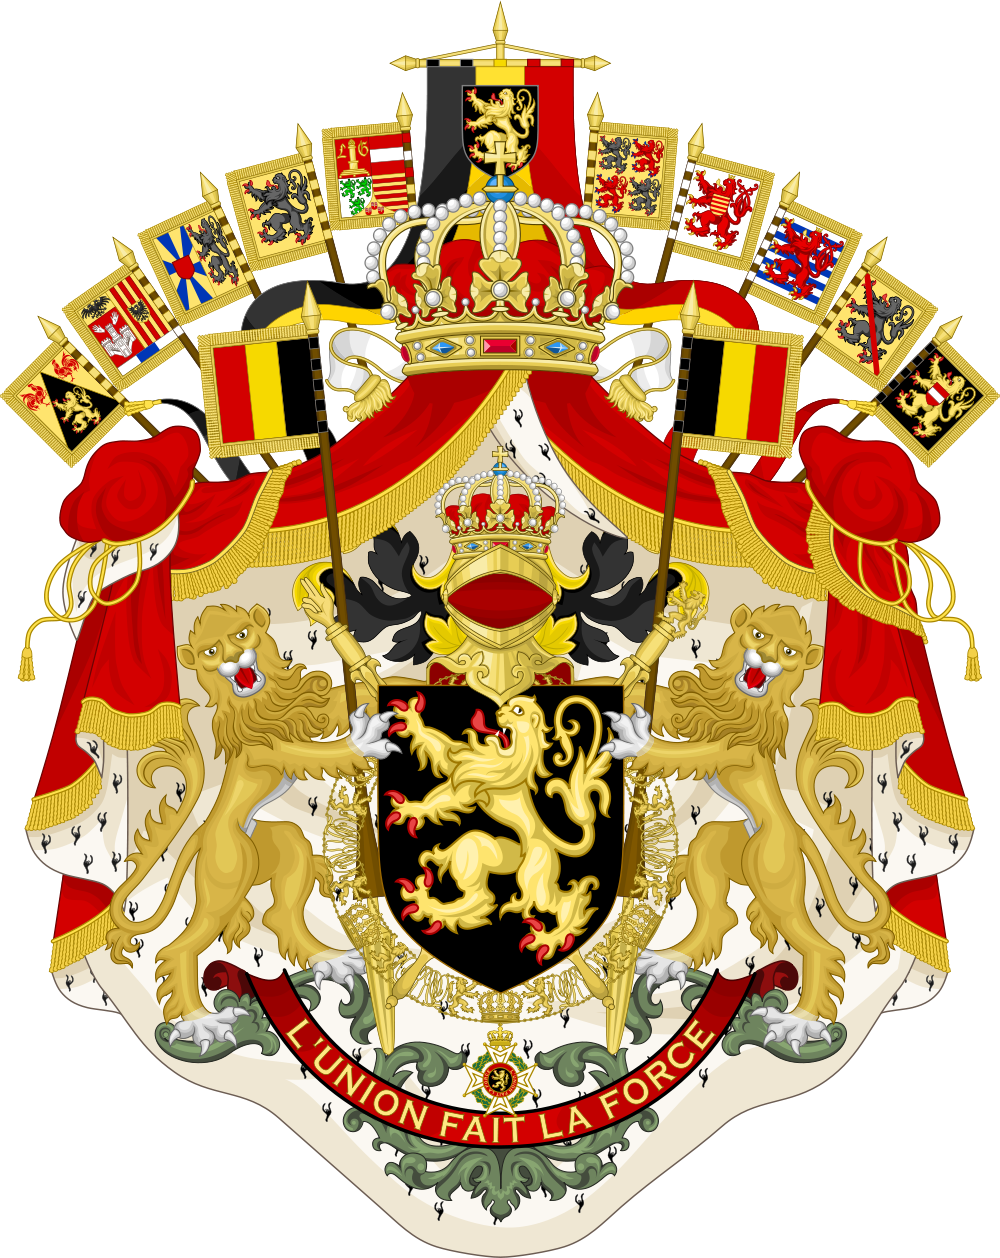 Coat of arms of Belgium